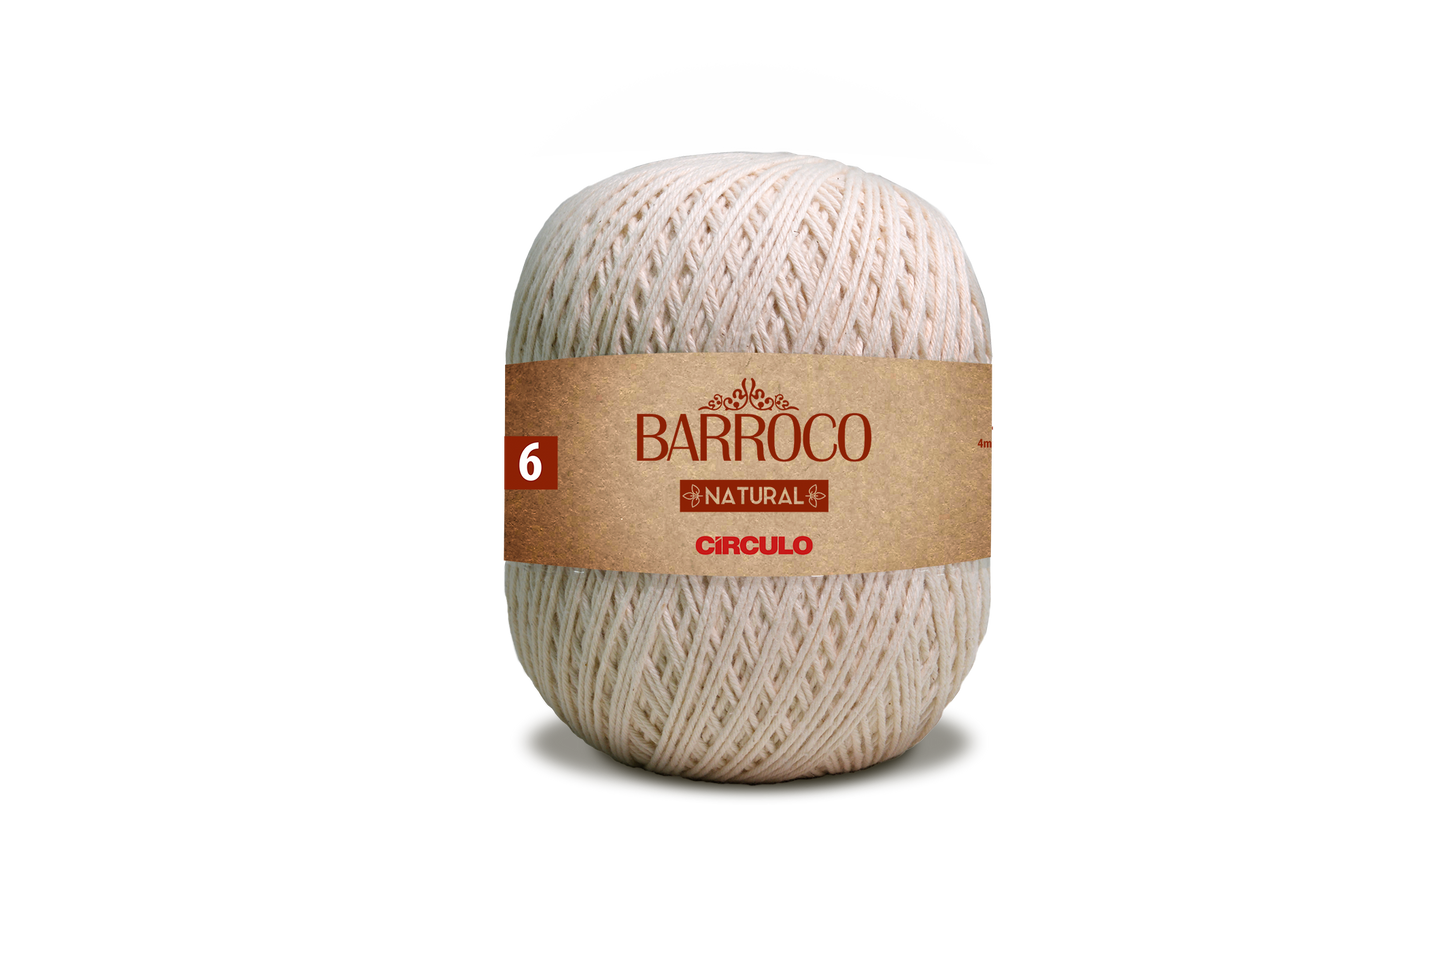 Circulo BARROCO NATURAL N.6 400 g, 100% Cotton Yarn (424889-20)